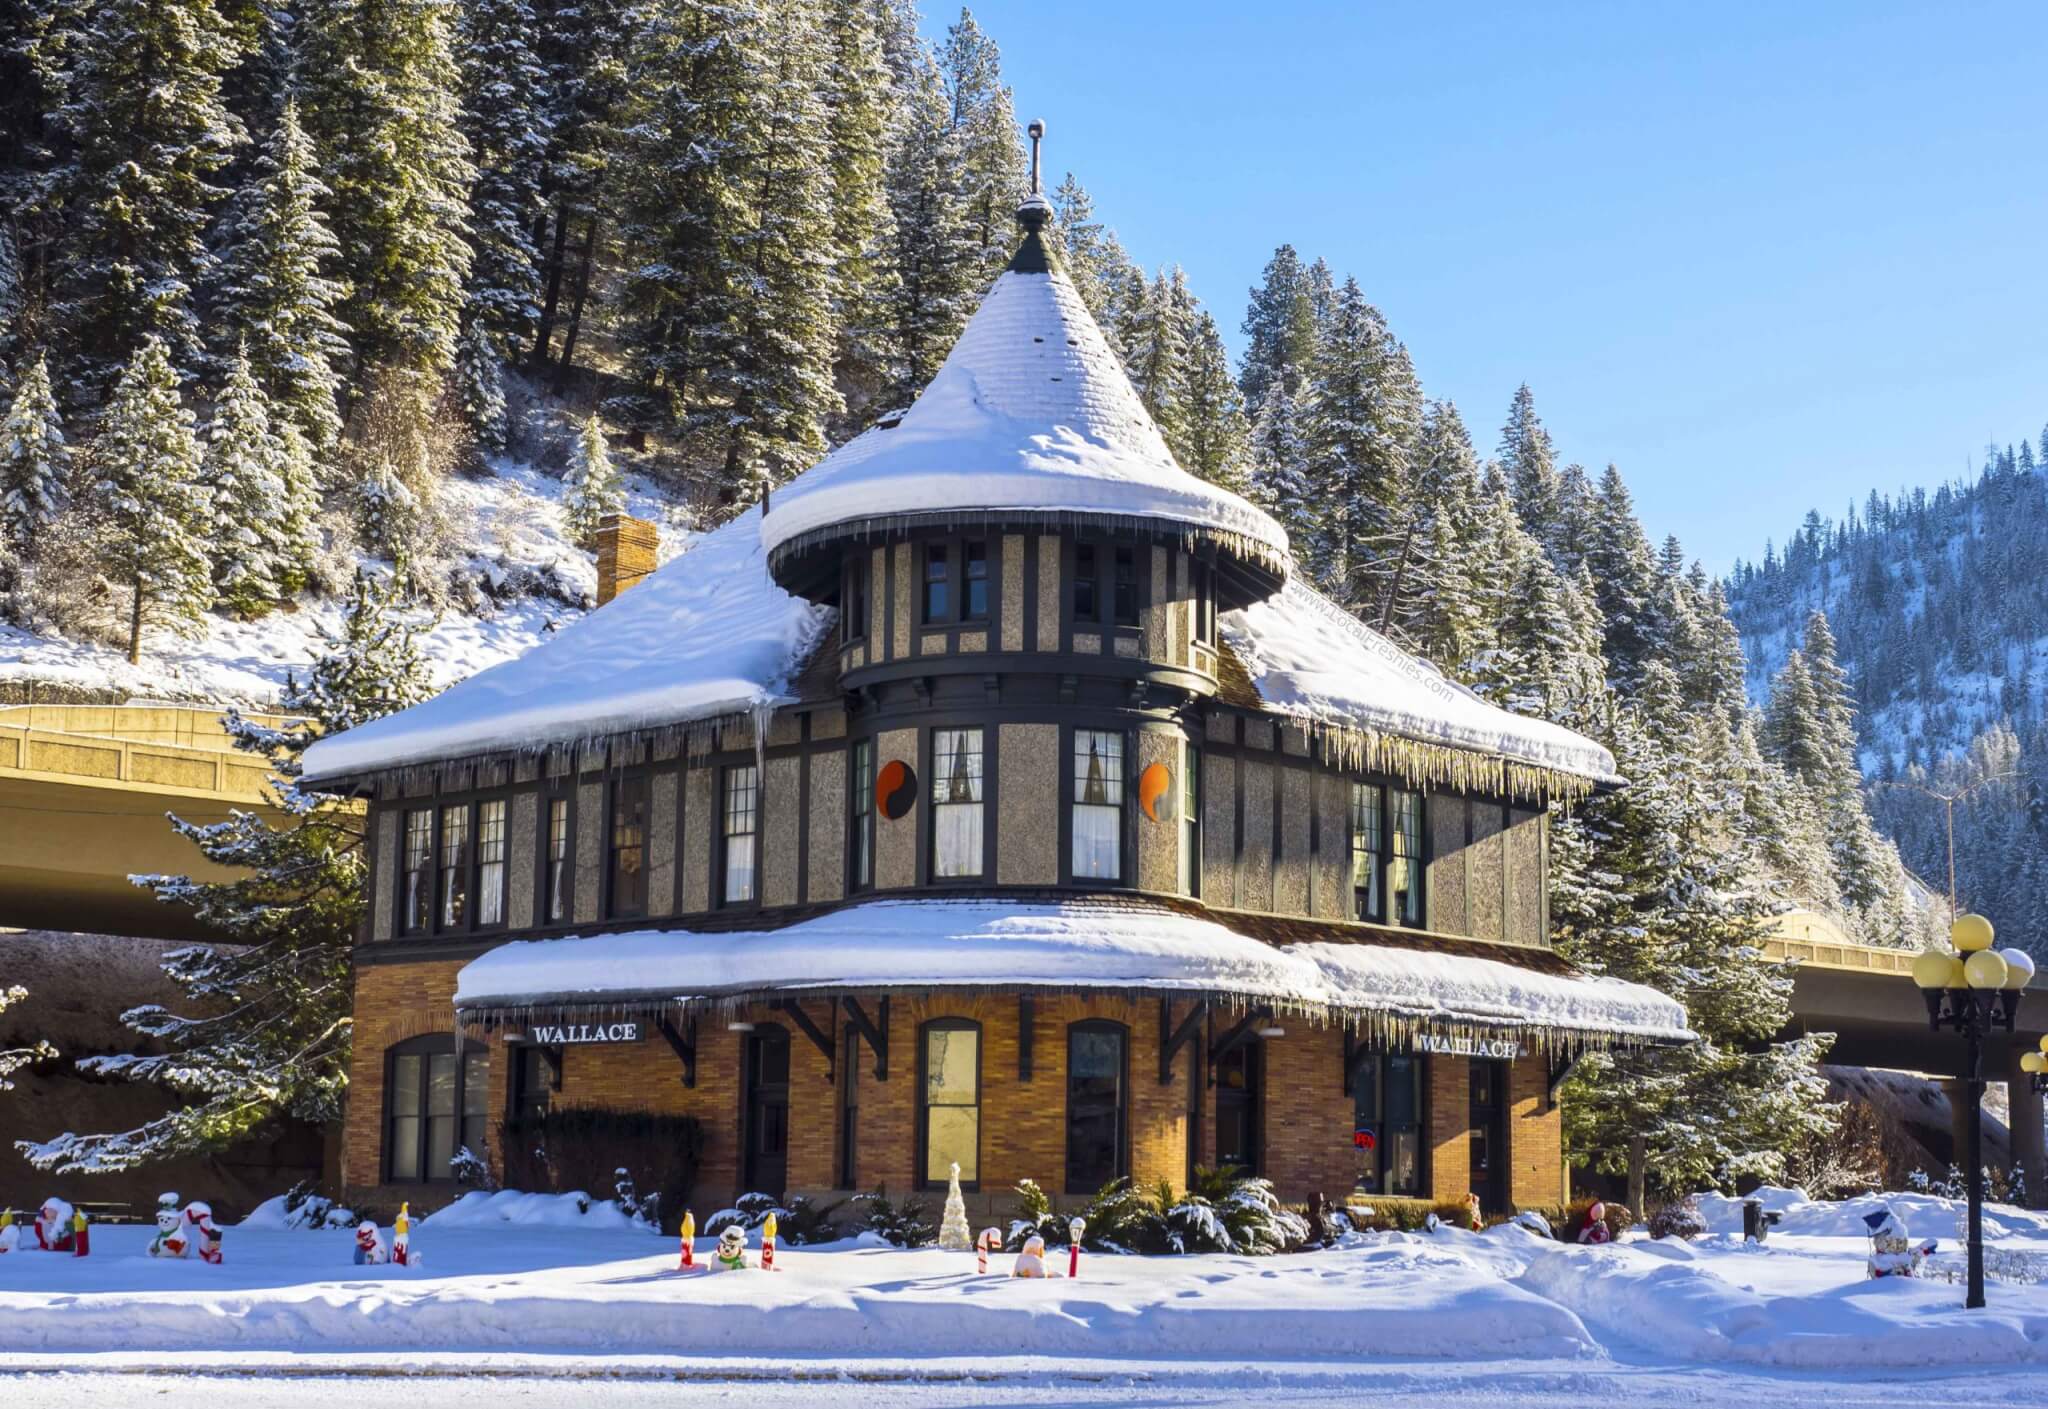 History Of Wallace Idaho Northern Idaho's Best Kept Secret for Skiing